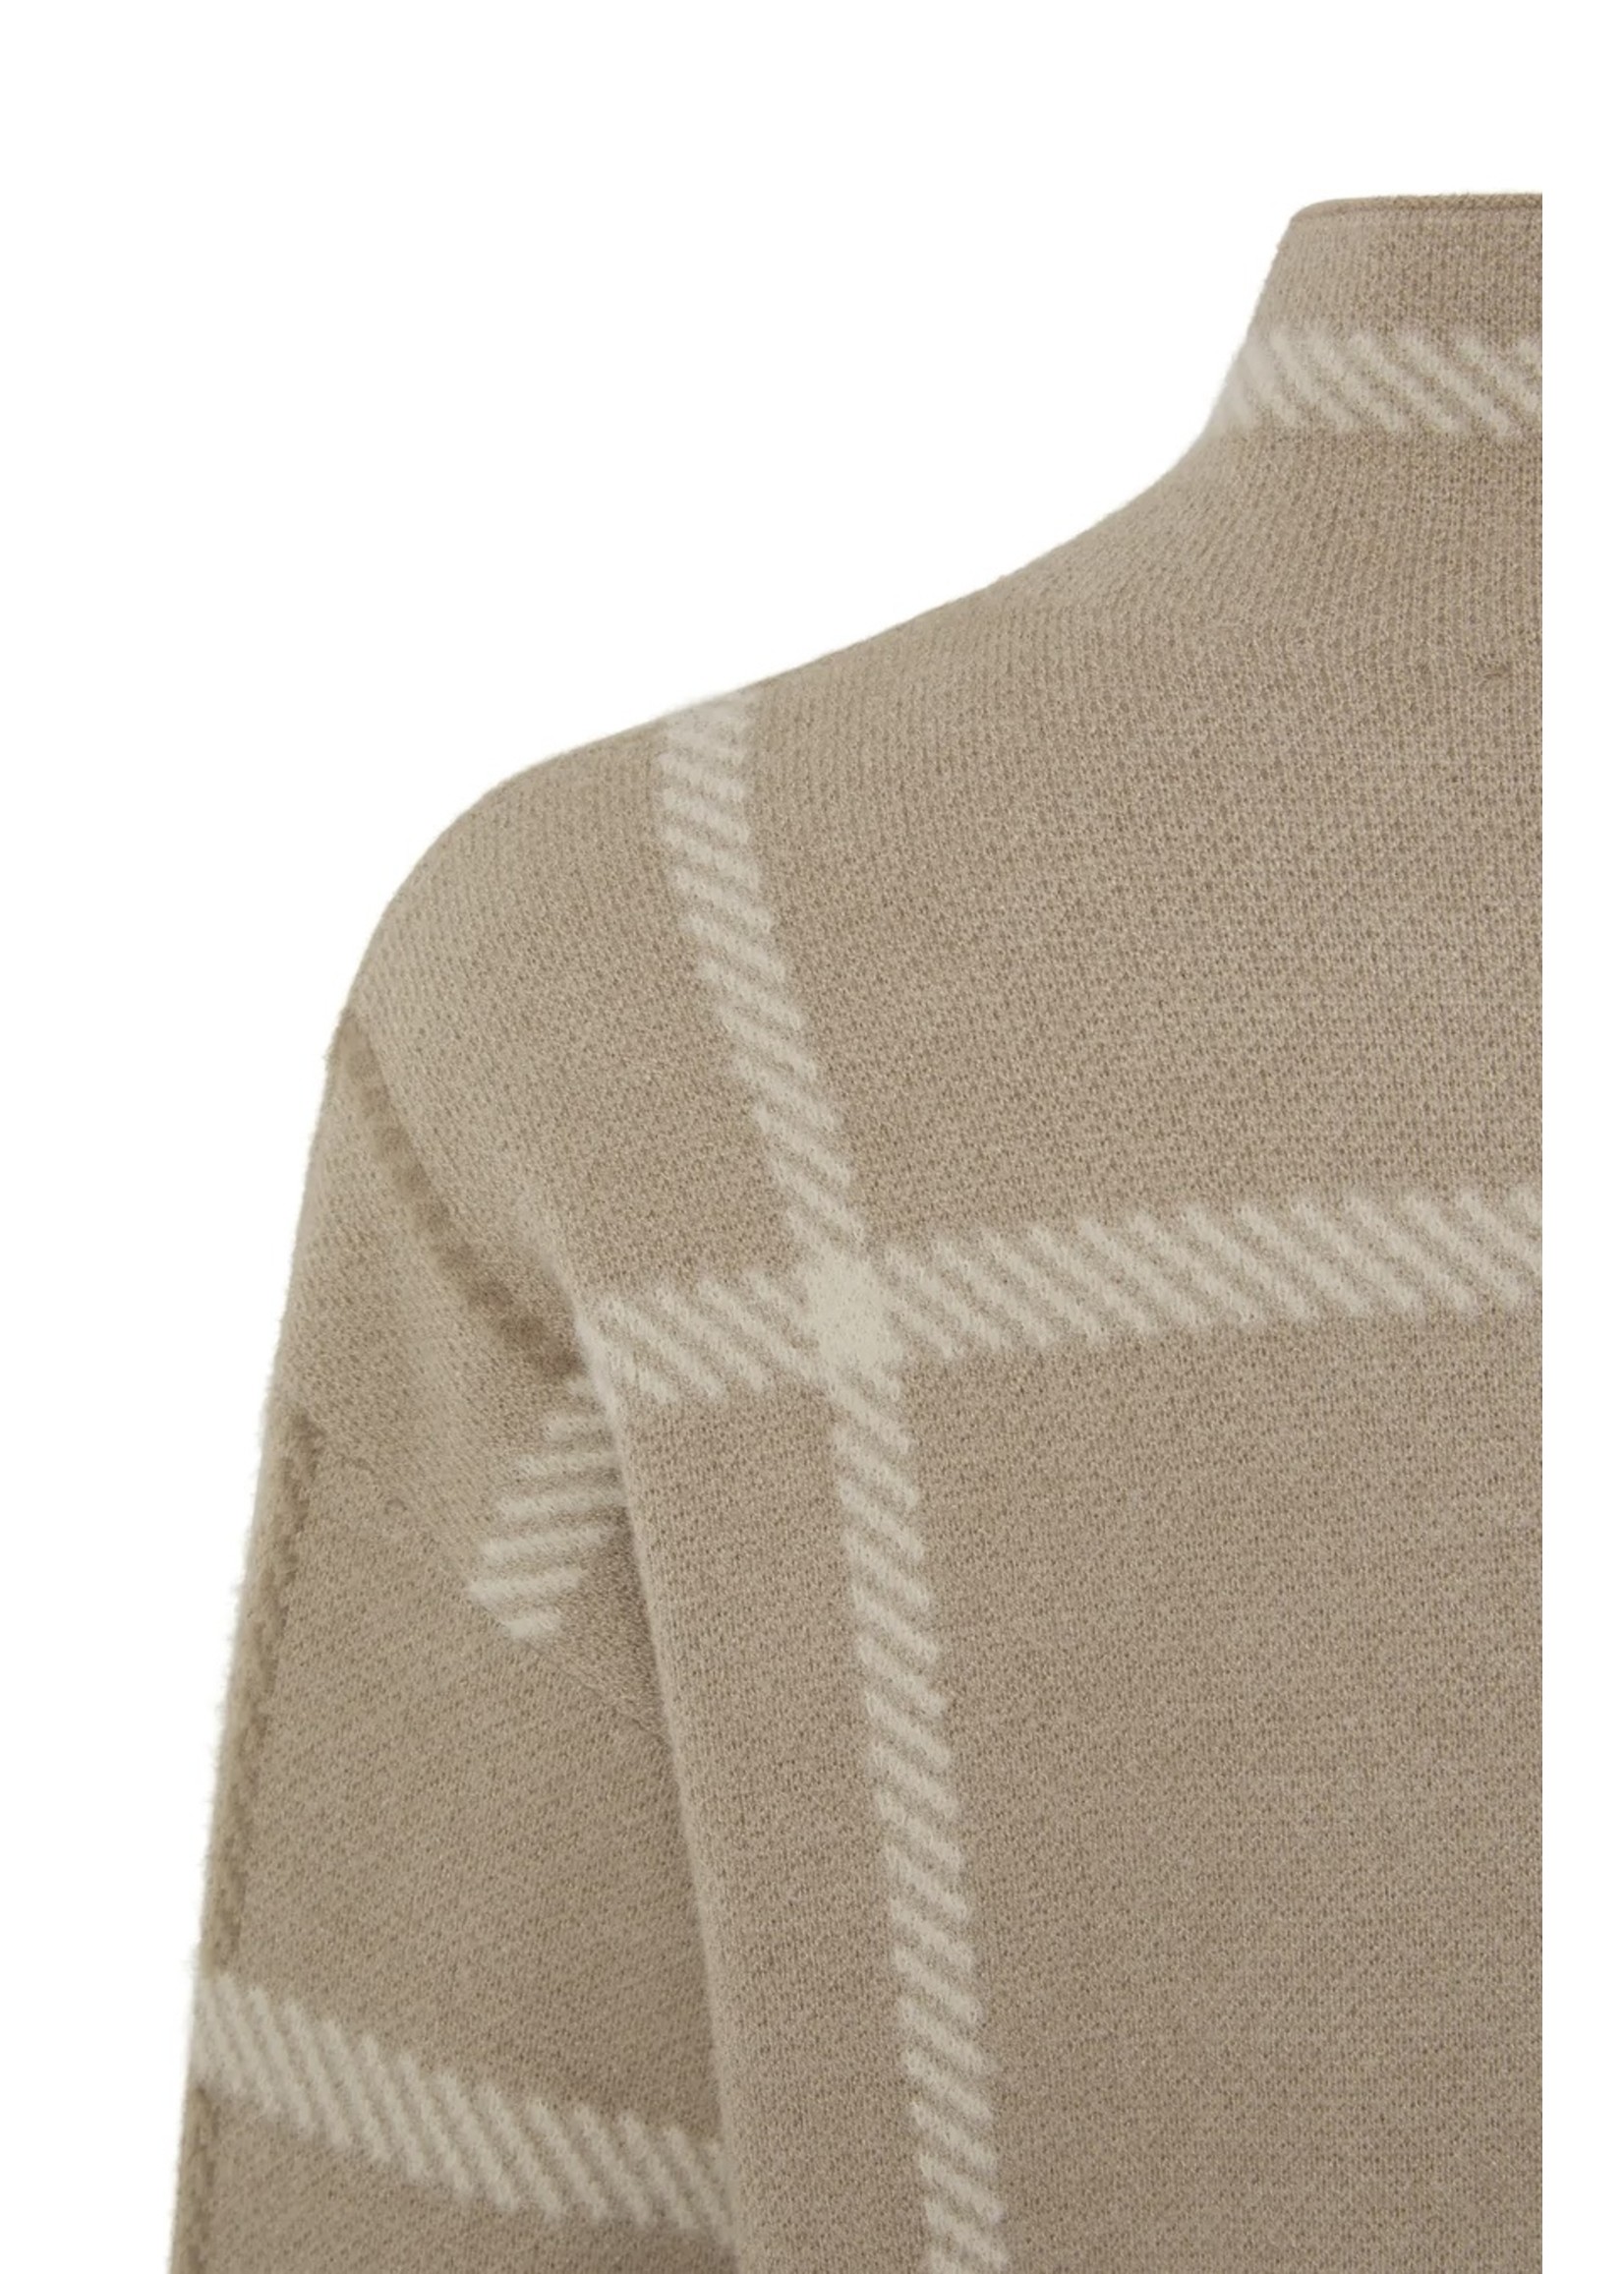 Yaya Yaya - Turtleneck Sweater in a check pattern with long sleeves